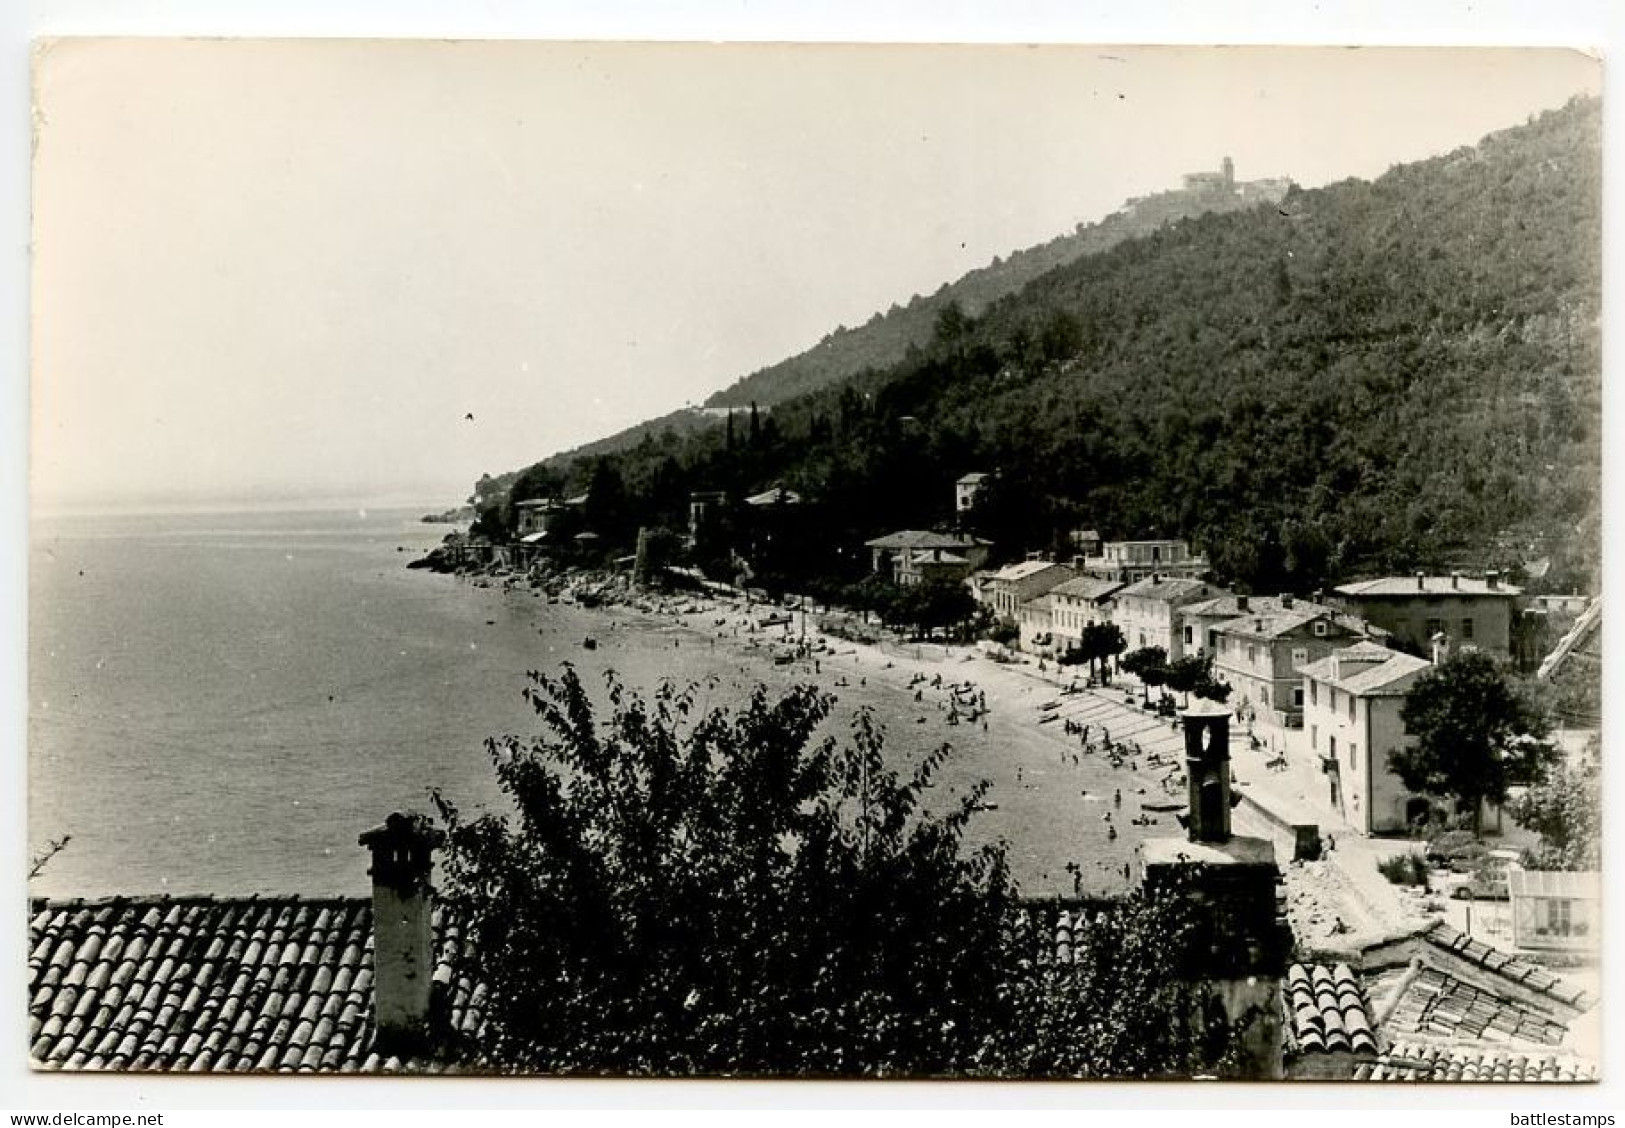 Yugoslavia 1967 RPPC Postcard Mošćenička Draga (Croatia) - Scenic View Of Beach; 30p Litostroy Turbine Factory Stamp - Jugoslavia